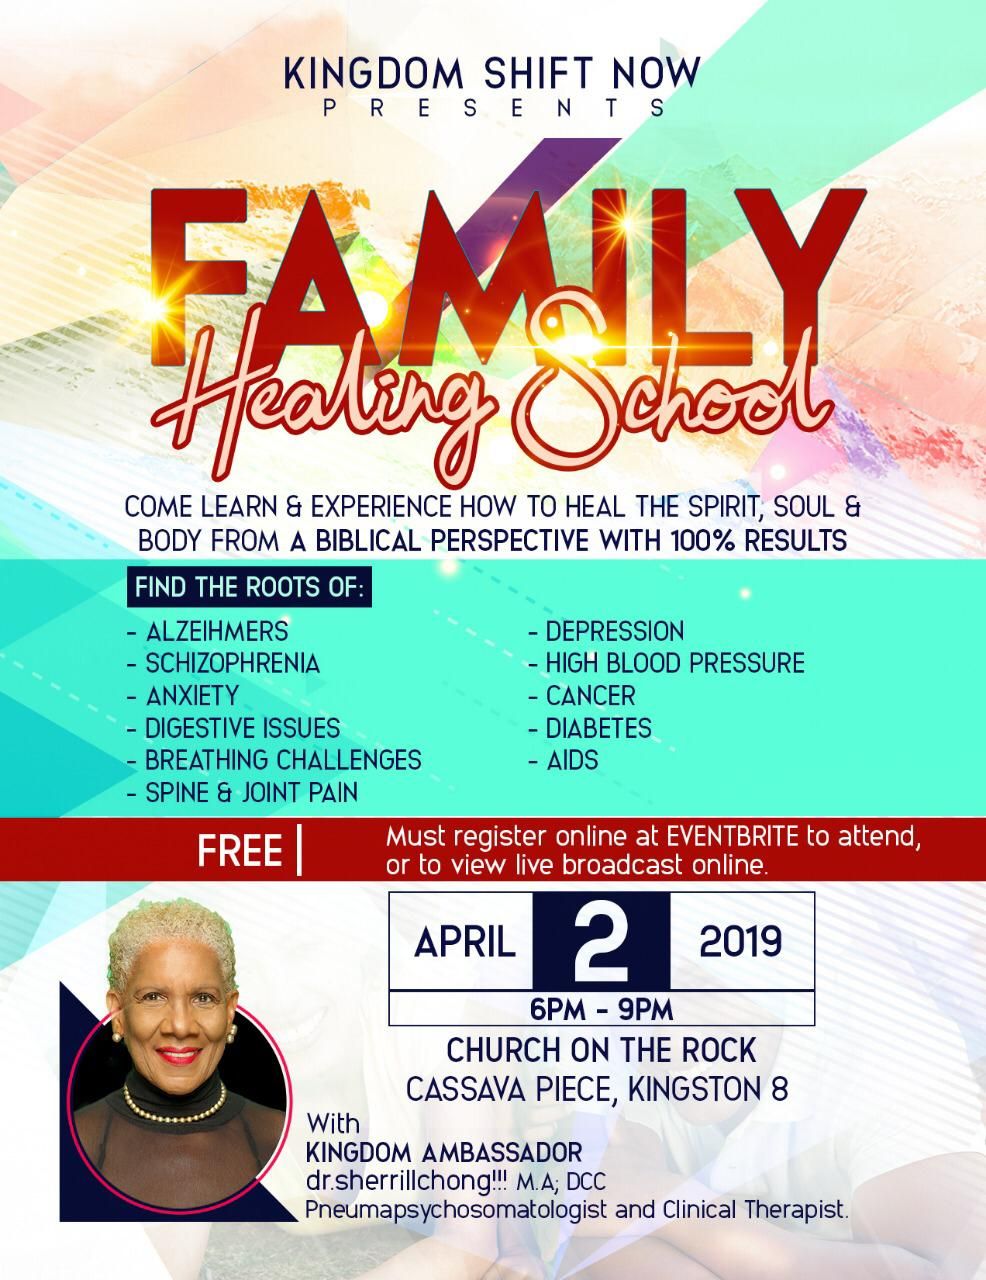 KINGDOM SHIFT NOW Presents FAMILY Healing School